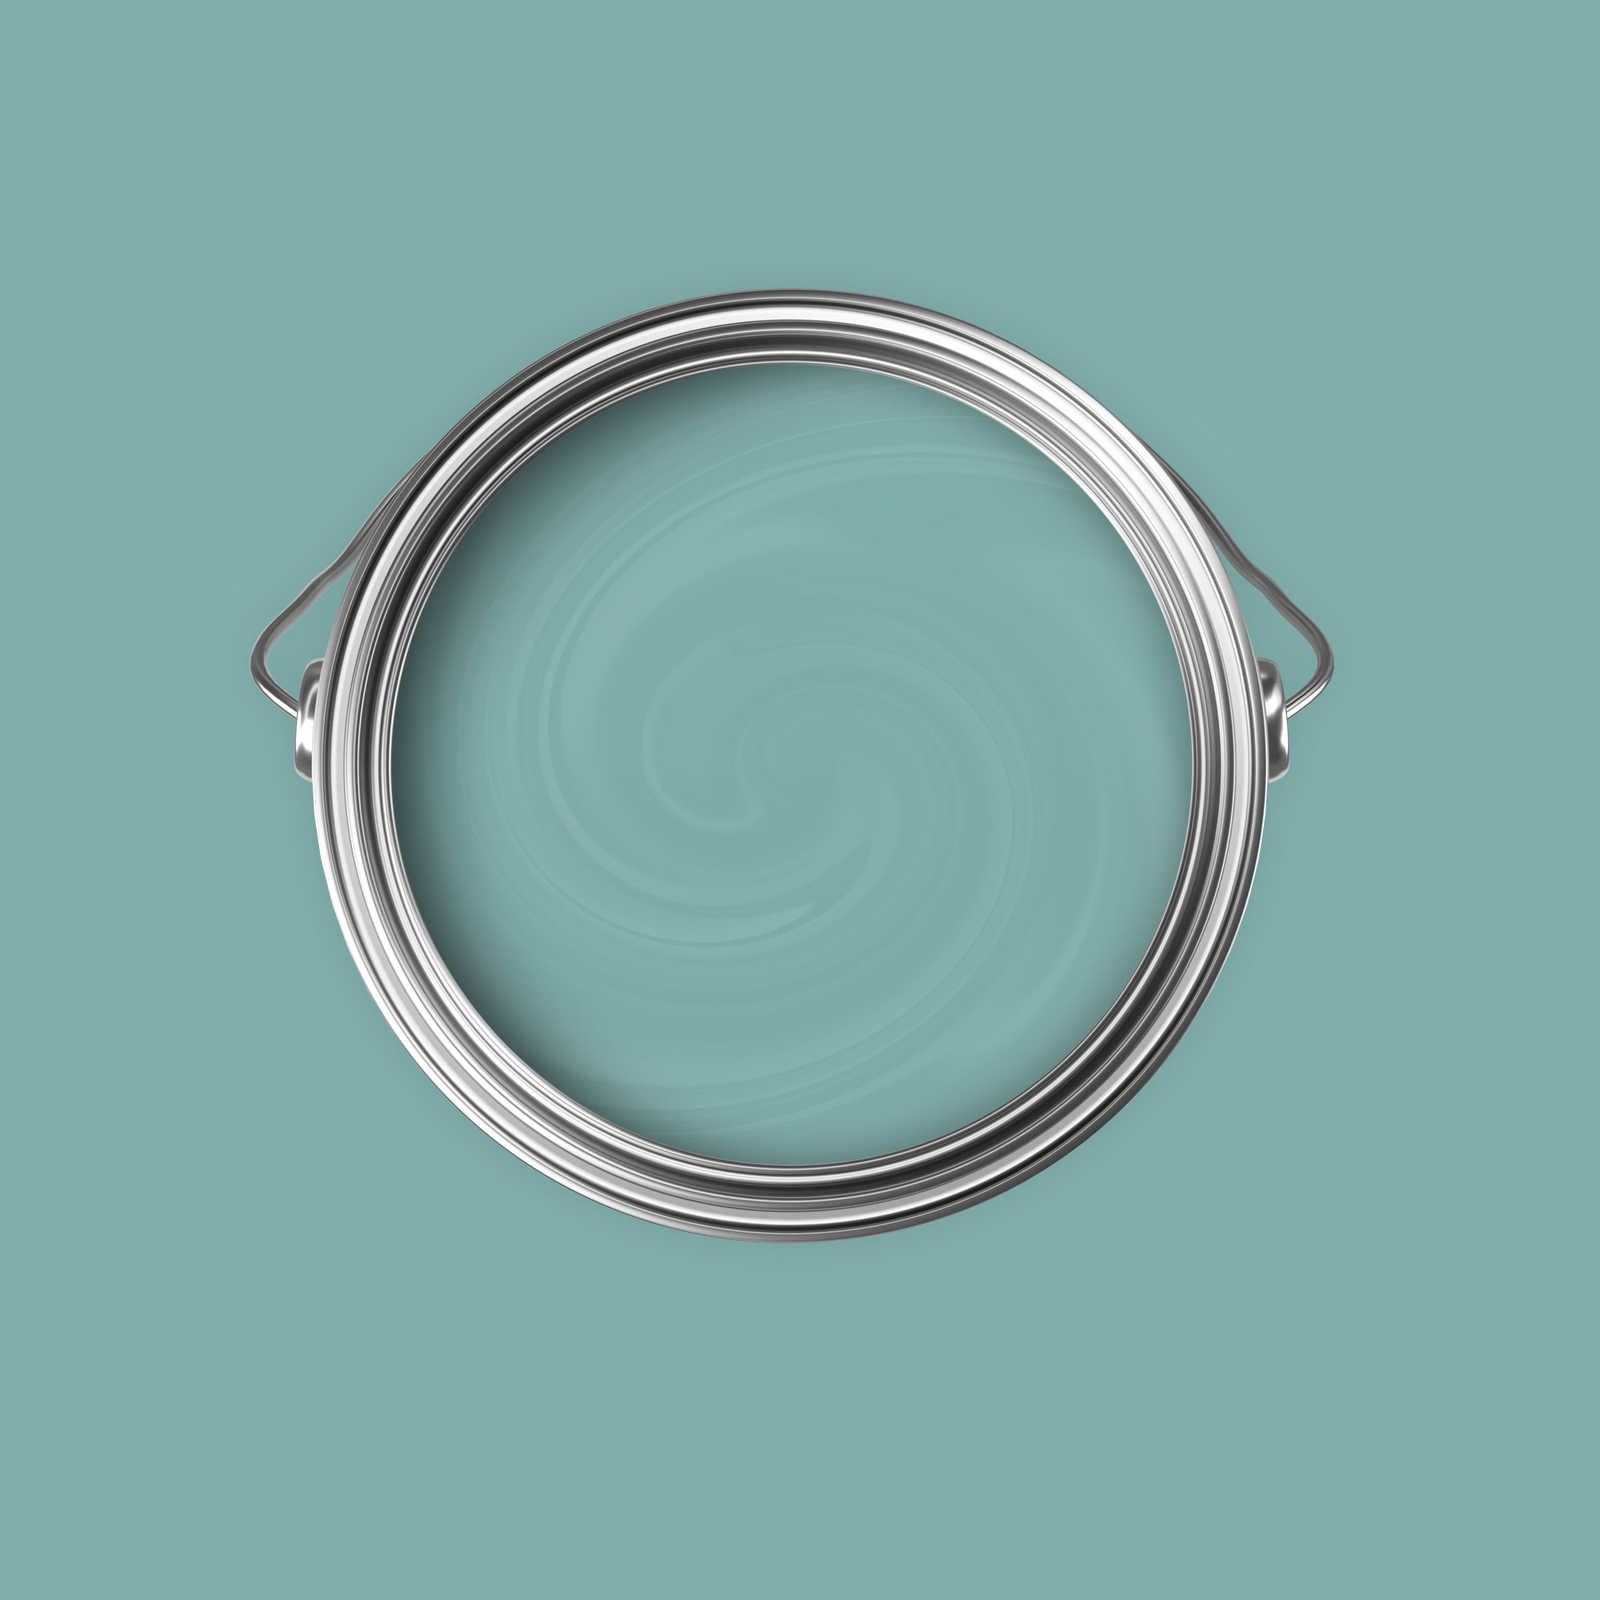             Premium Wall Paint Winging Mint »Expressive Emerald« NW408 – 5 litre
        